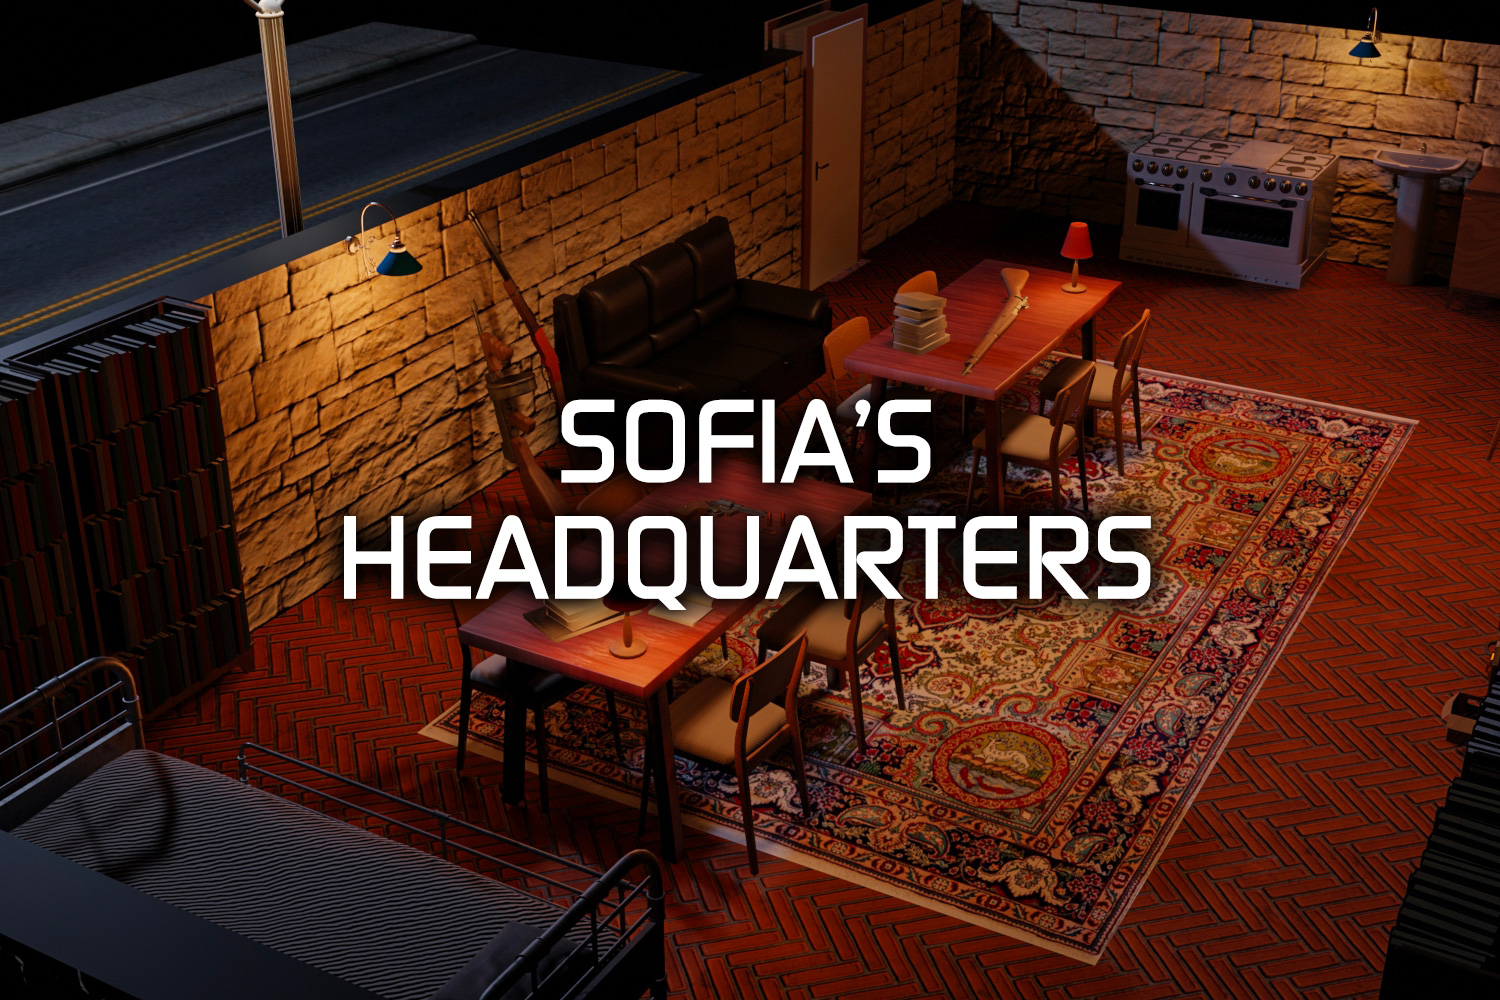 SOFIA’S HEADQUARTERS